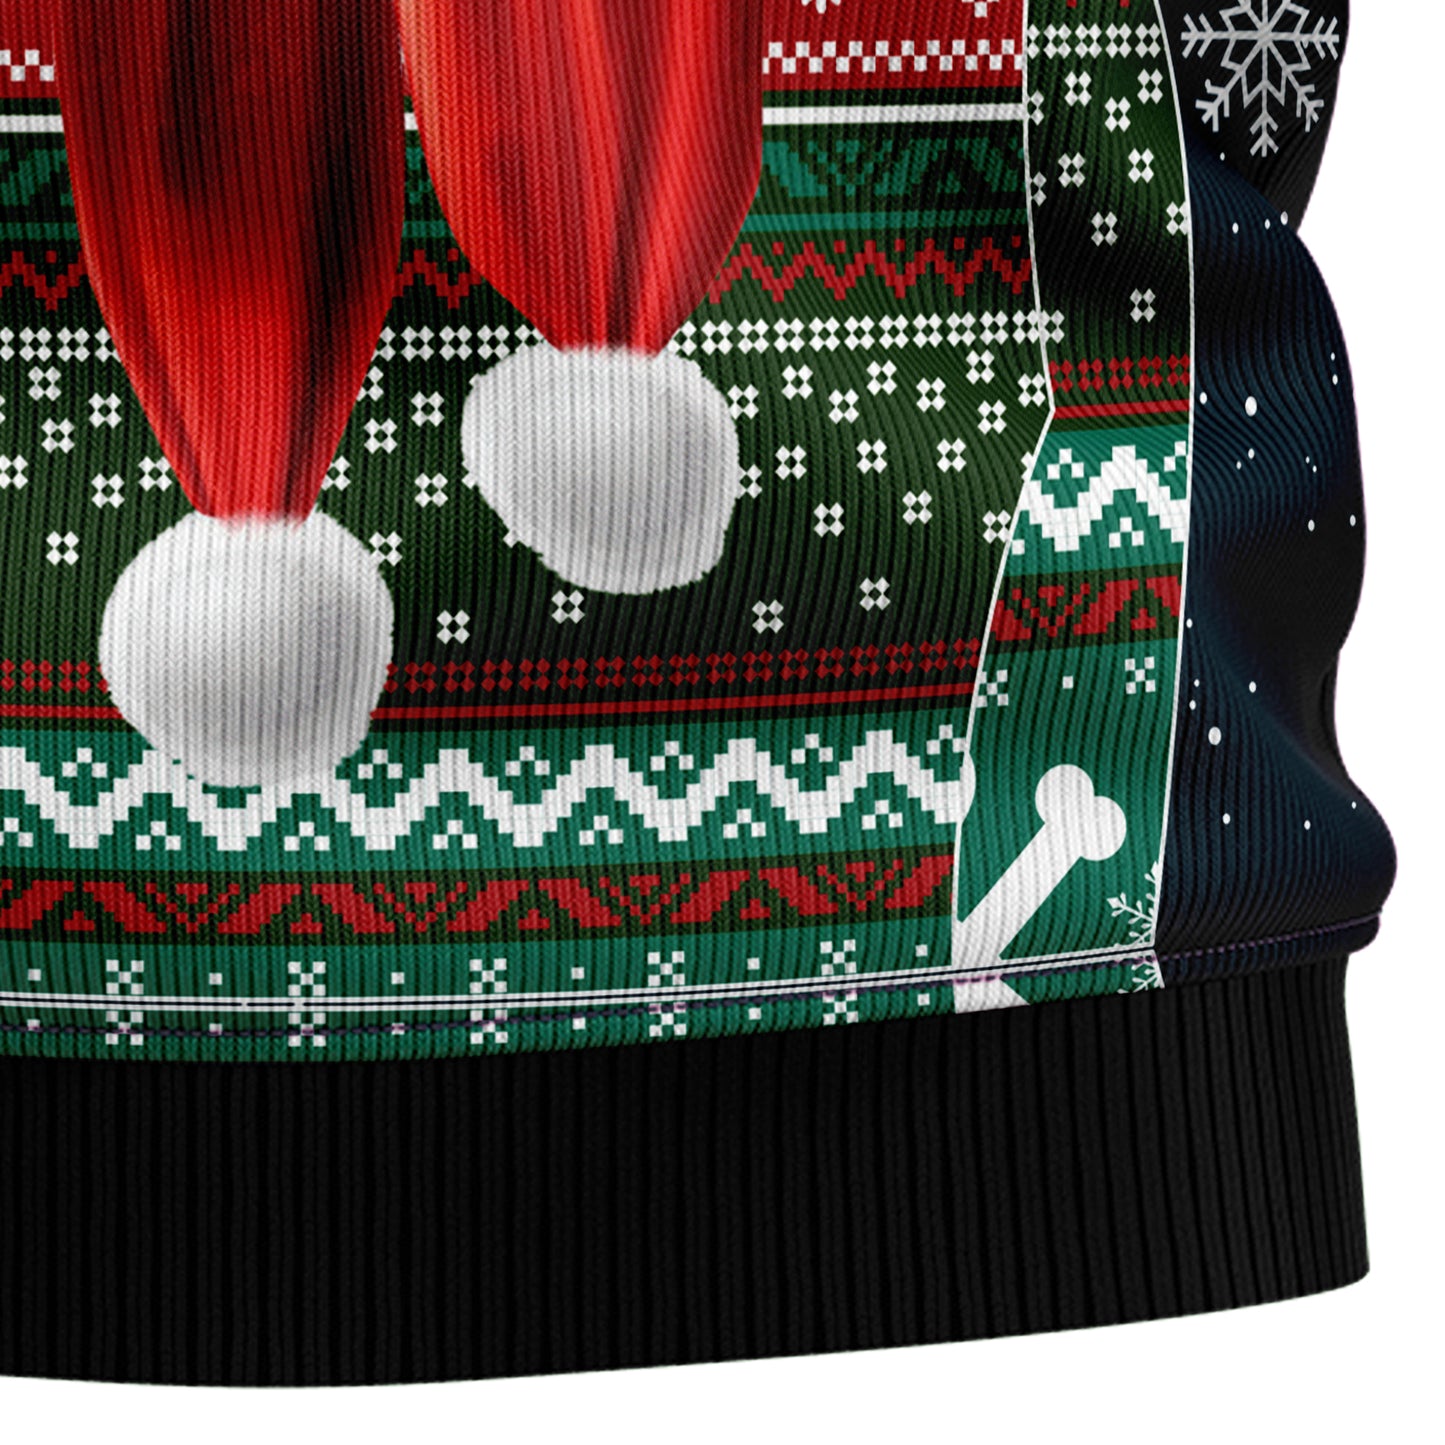 Cool French Bulldog TG51027 Ugly Christmas Sweater